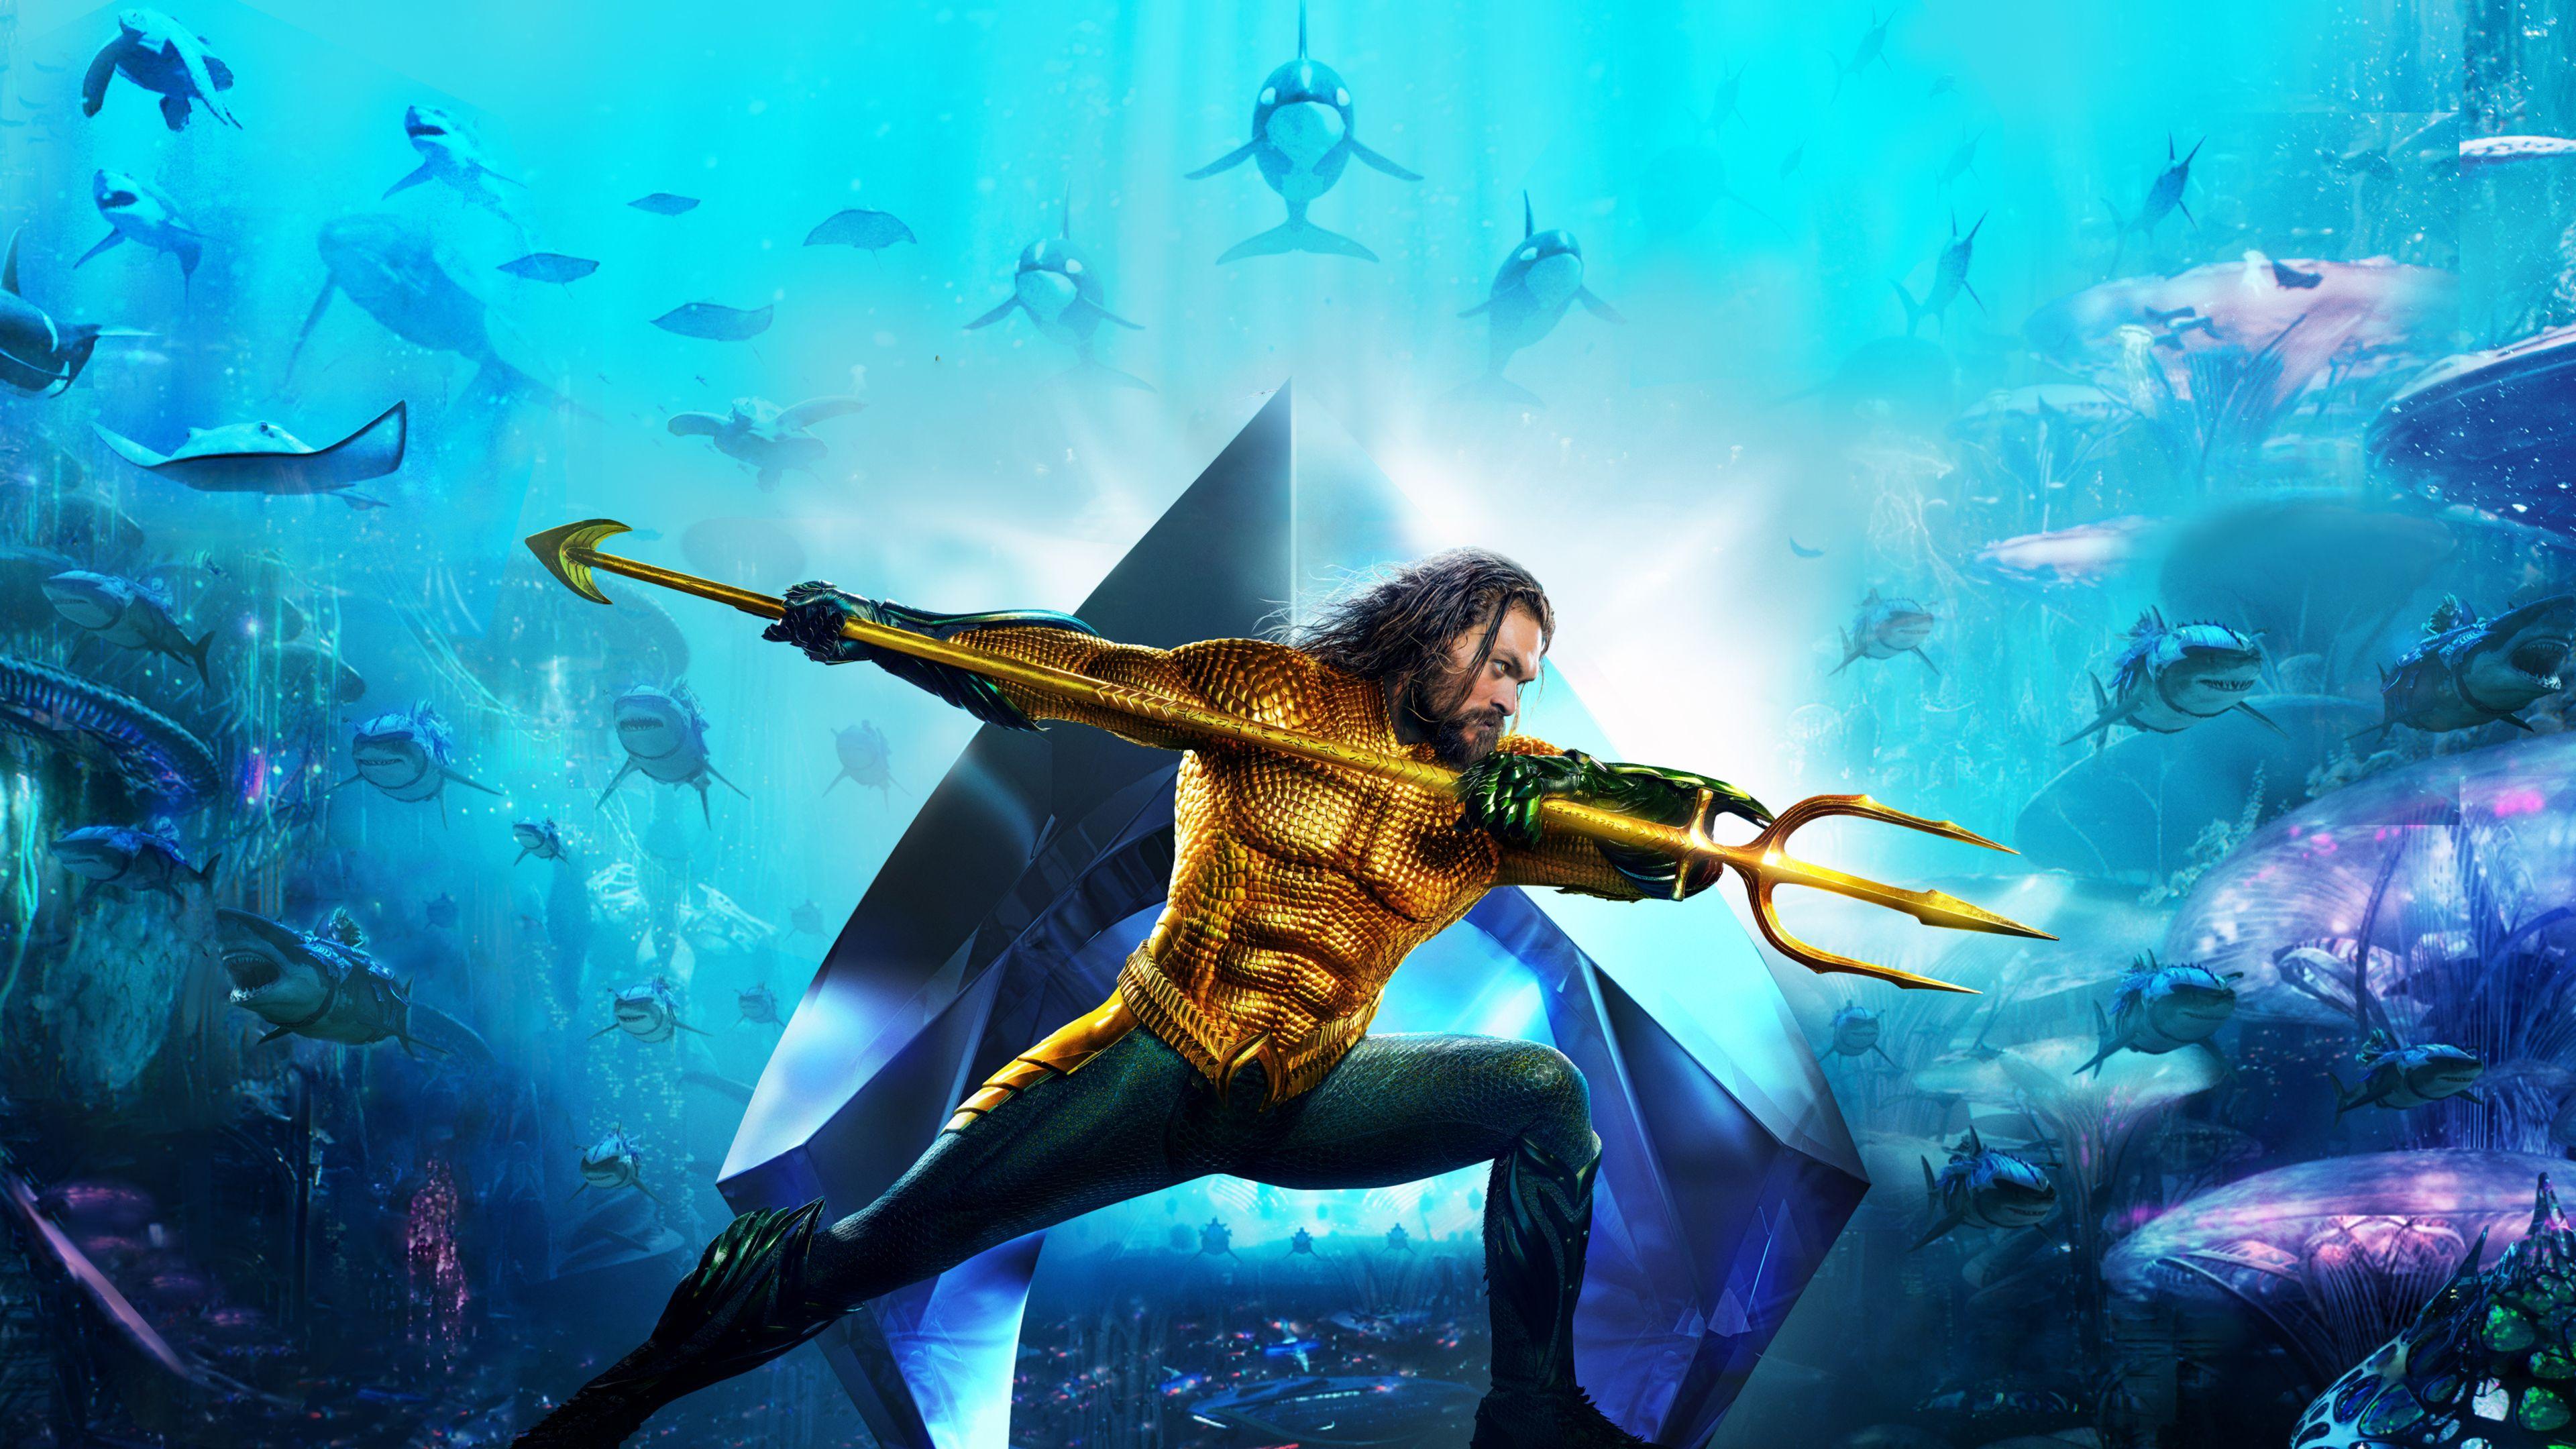 Wallpaper 4k Aquaman Movie New Poster 2018 2018 Movies Wallpaper